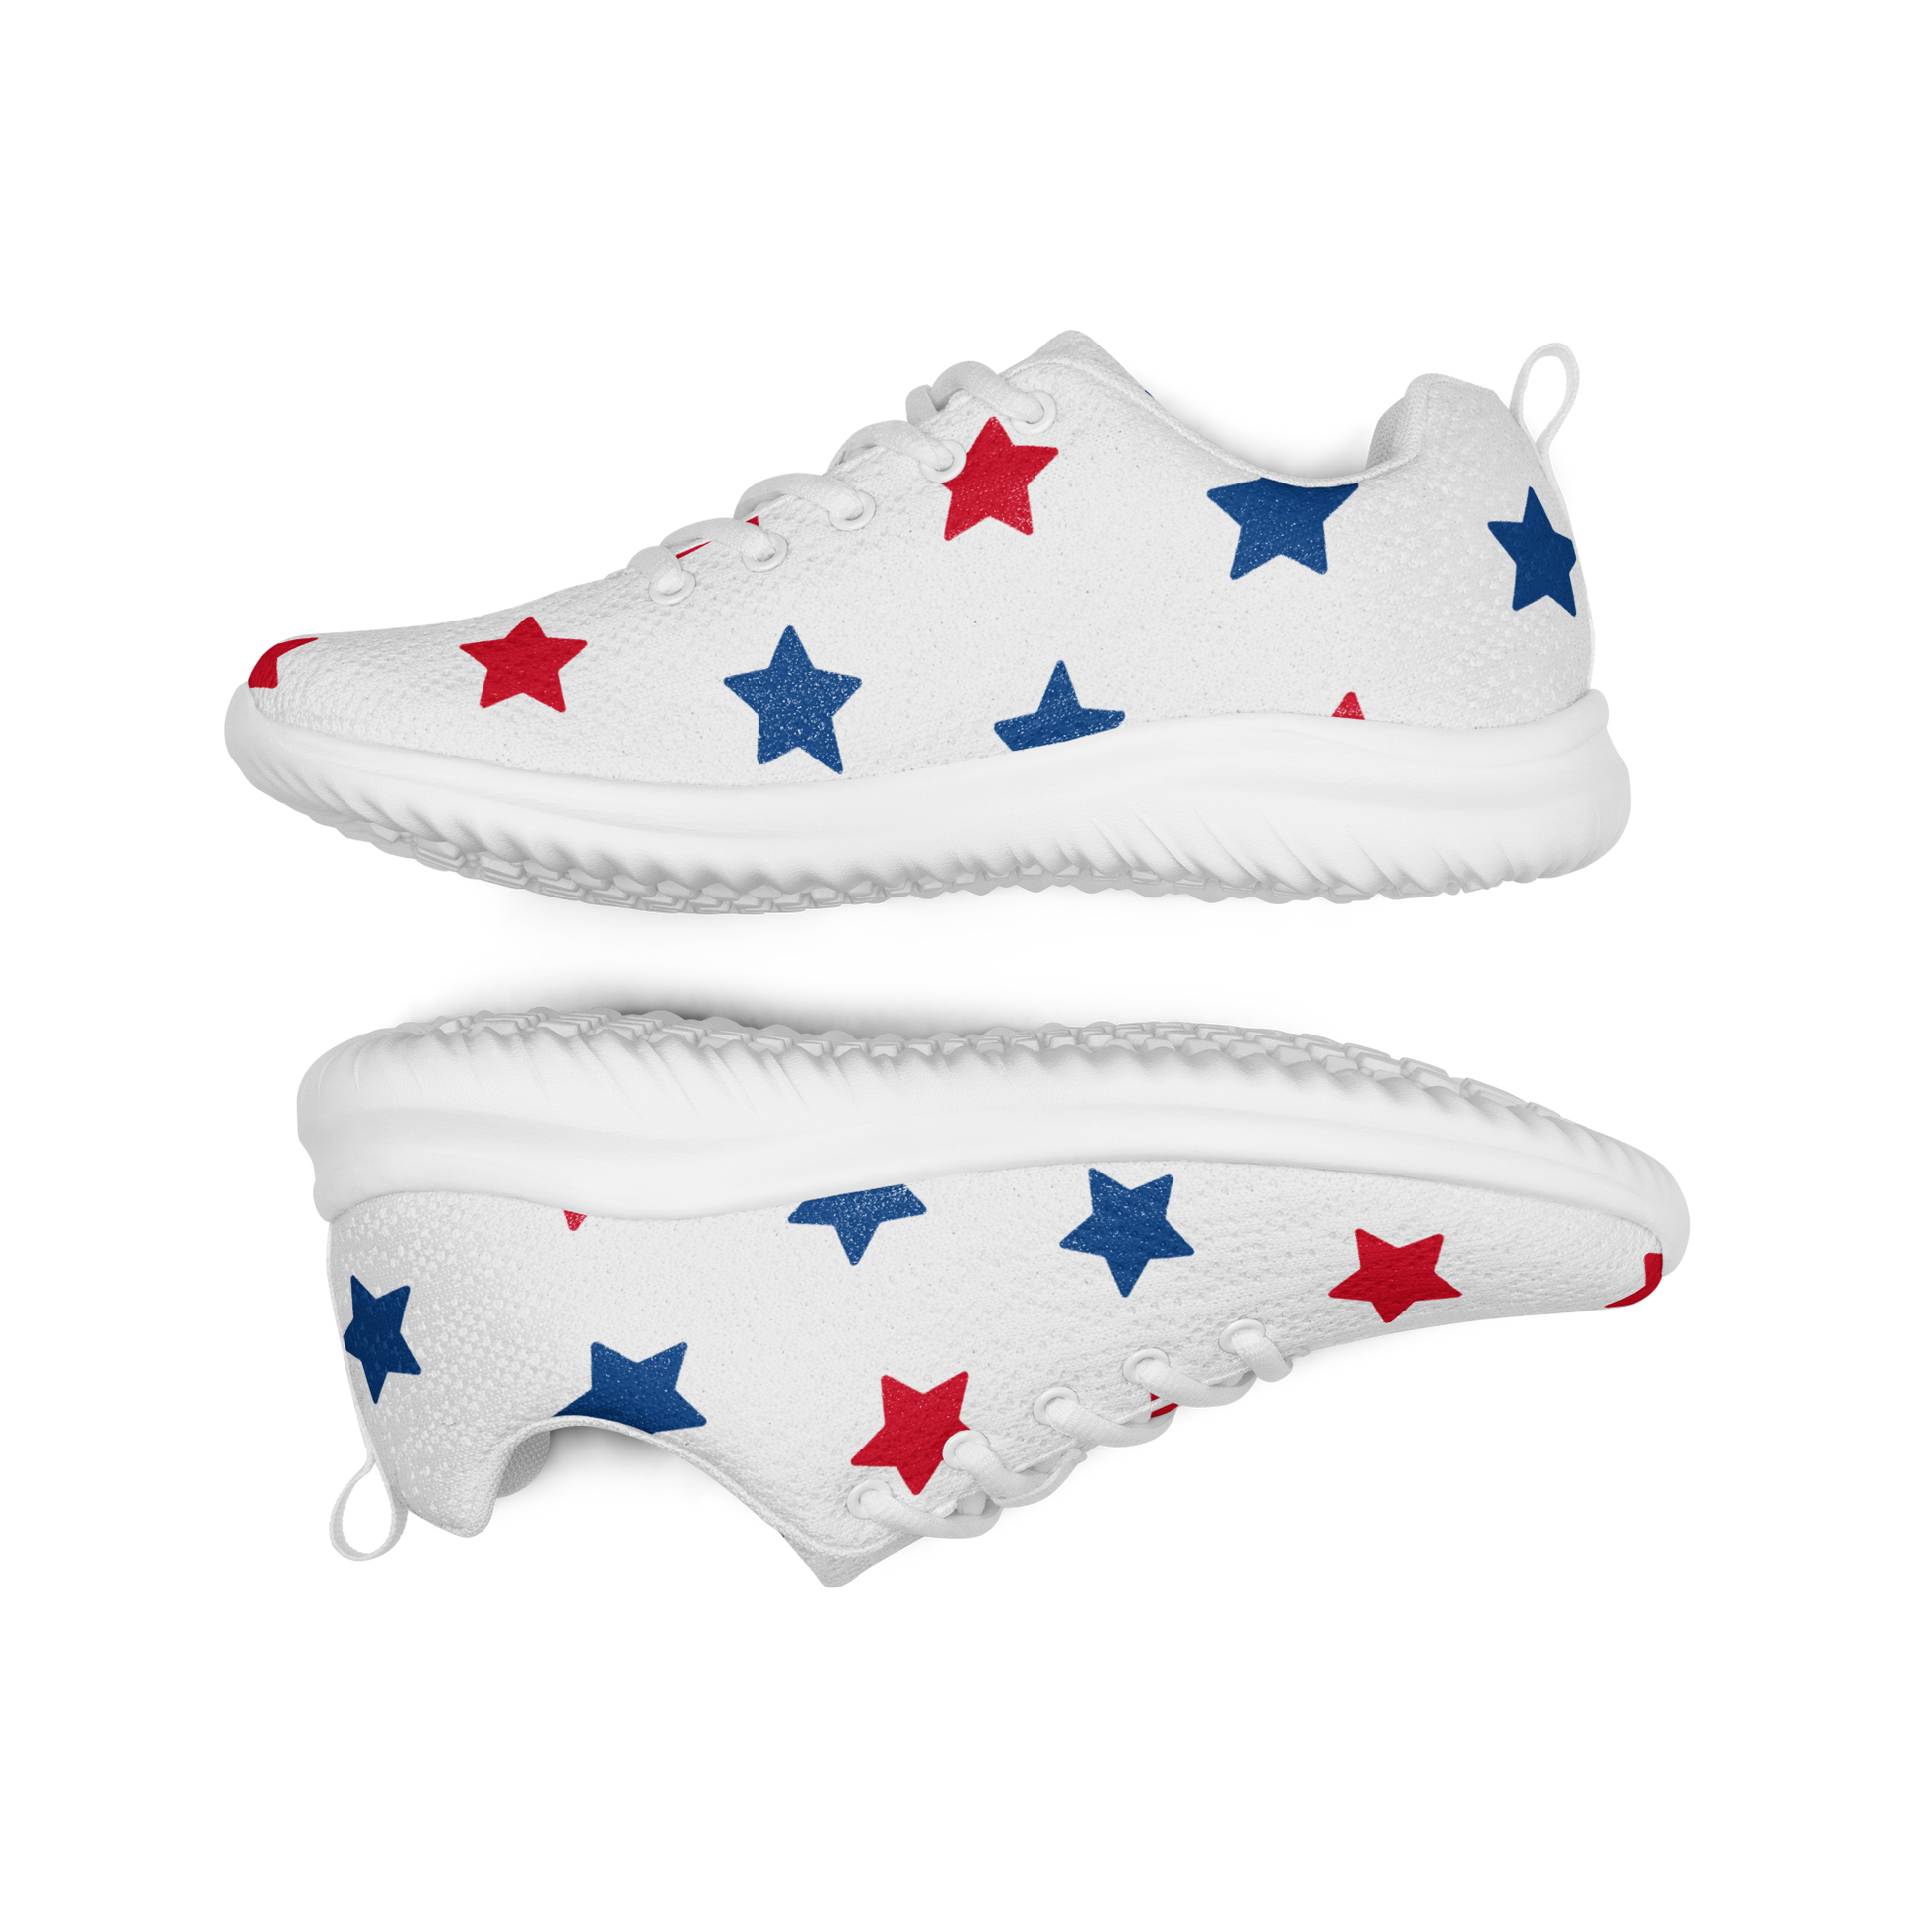 Men's Patriotic Sneakers